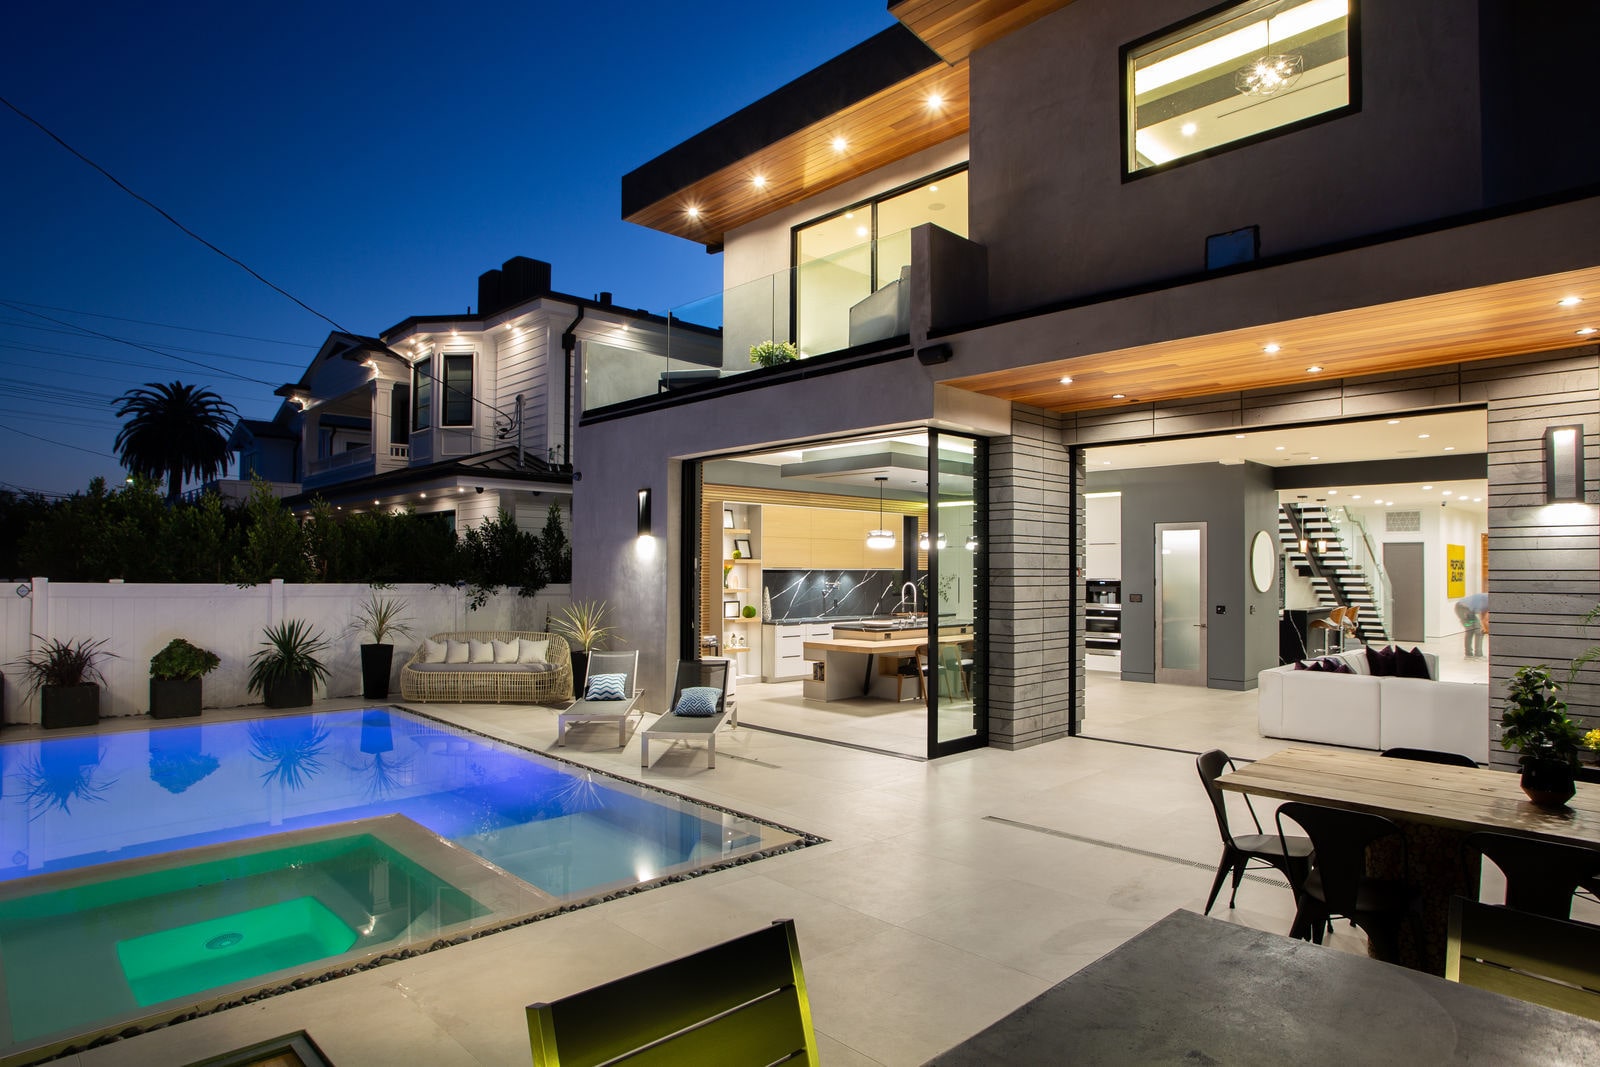 Norstone Planc Large Format Tile on Modern California Pool Home Backyard